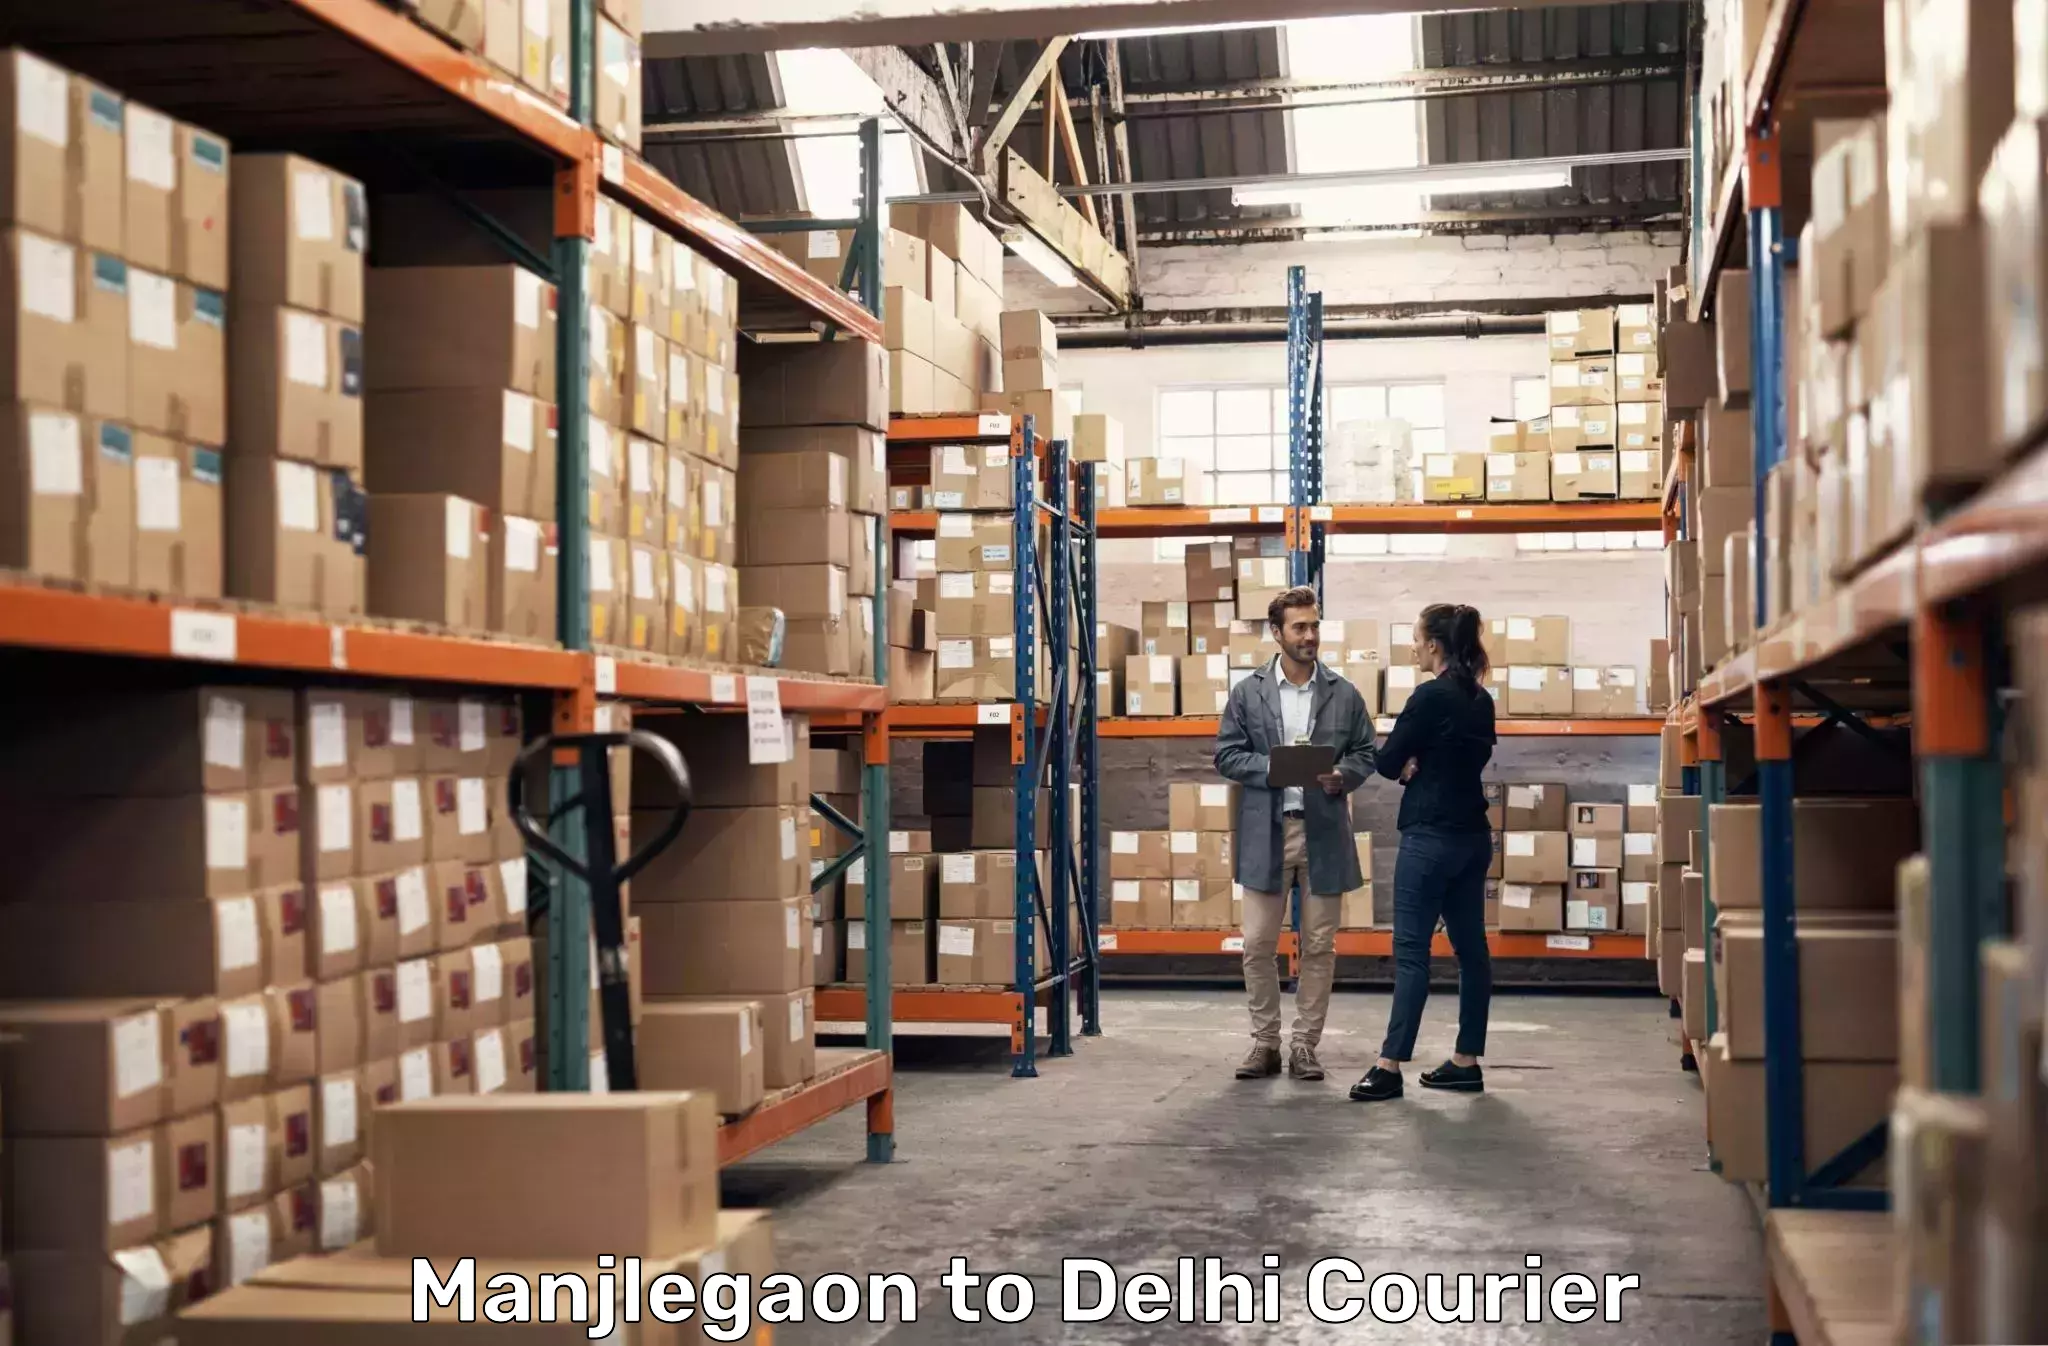 Express shipping Manjlegaon to Delhi